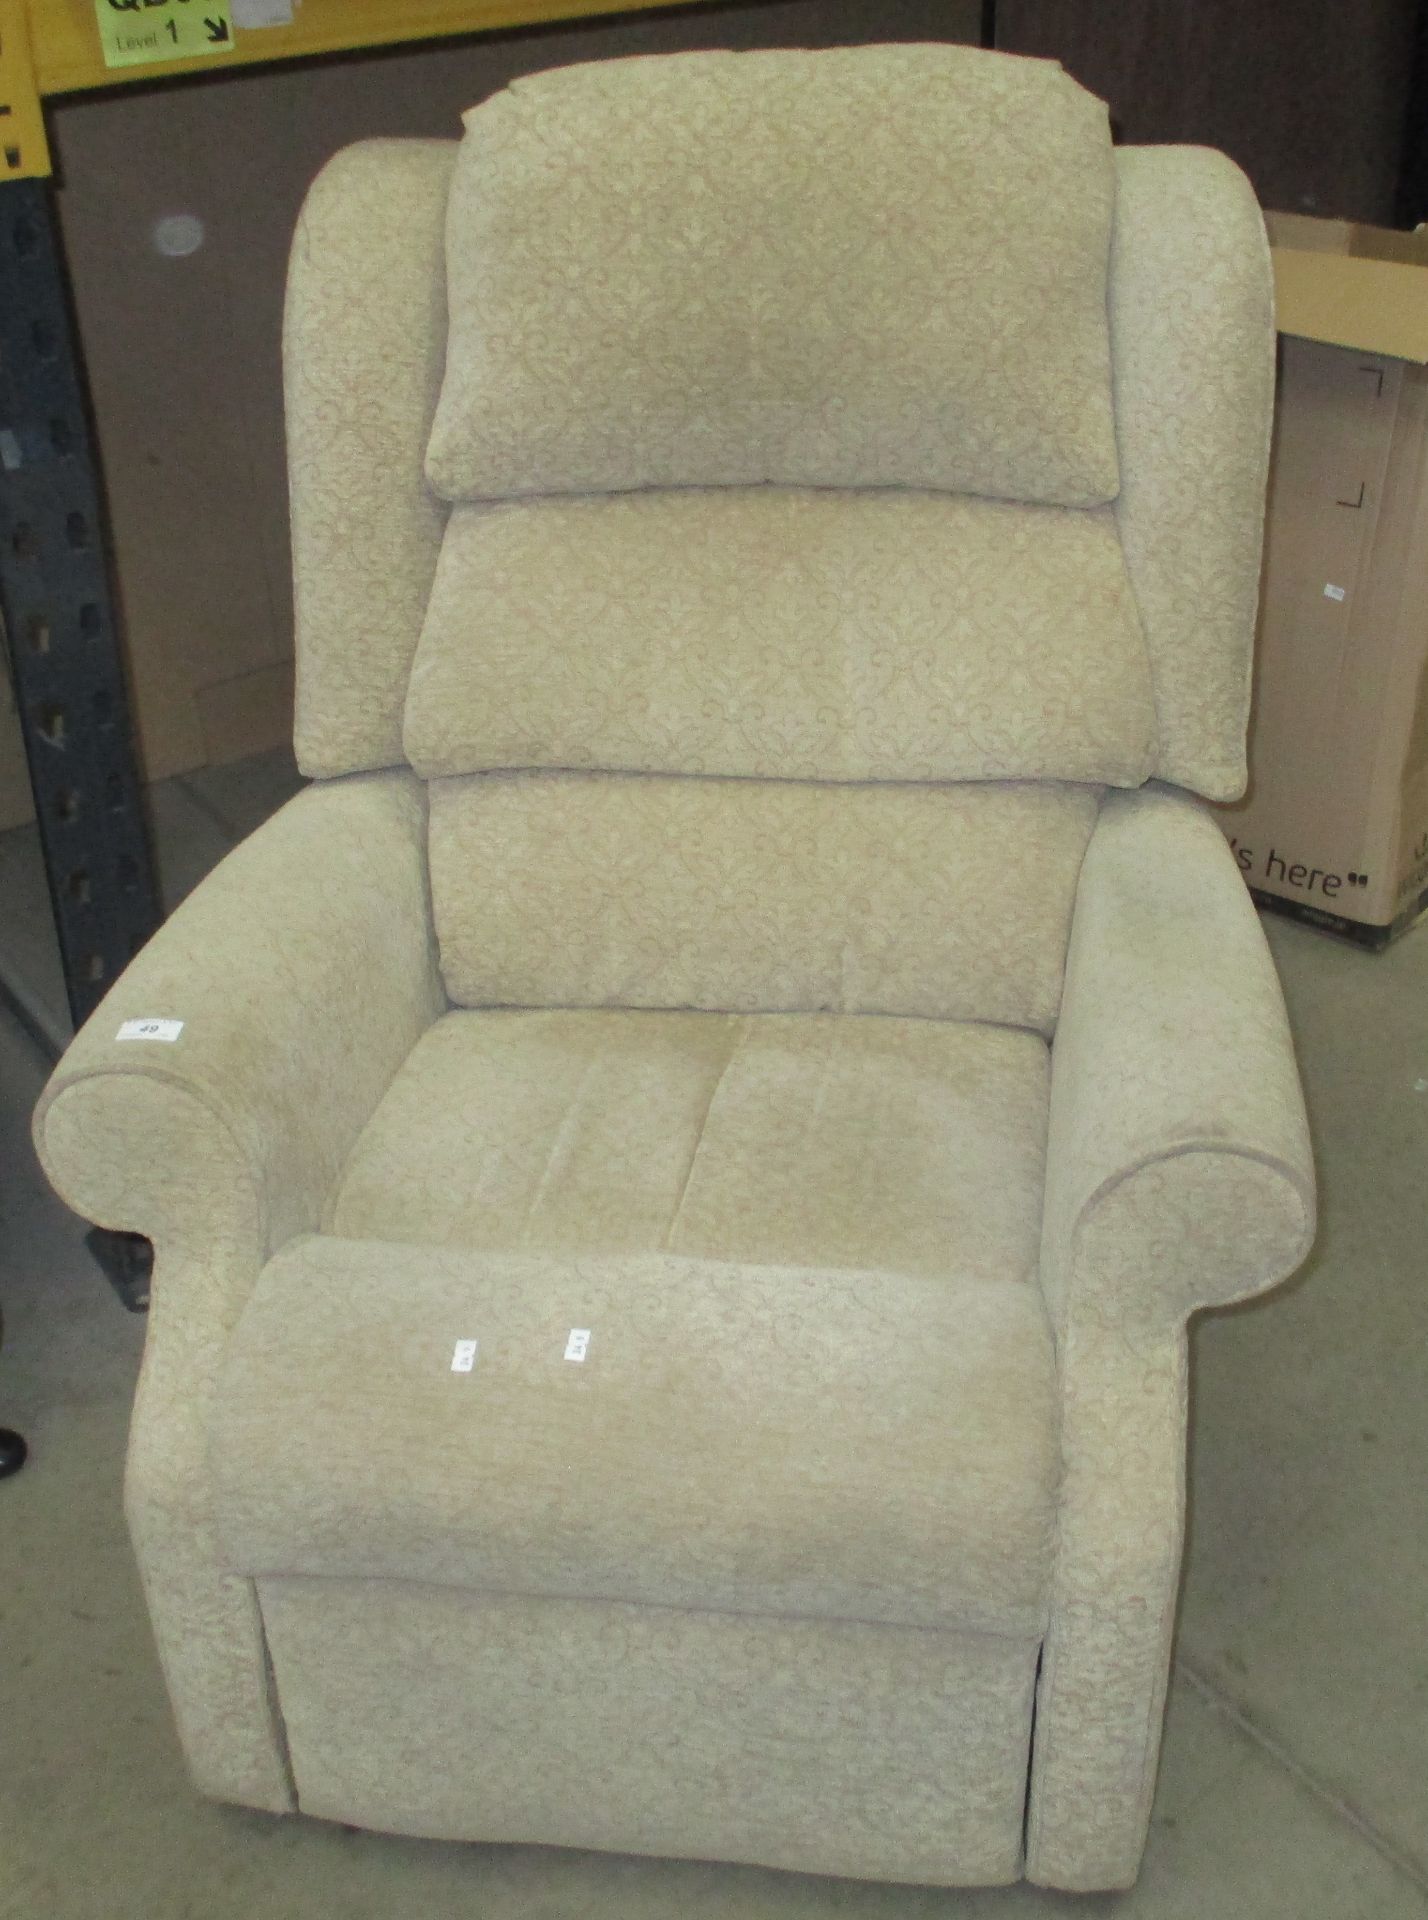 A light brown upholstered reclining armchair